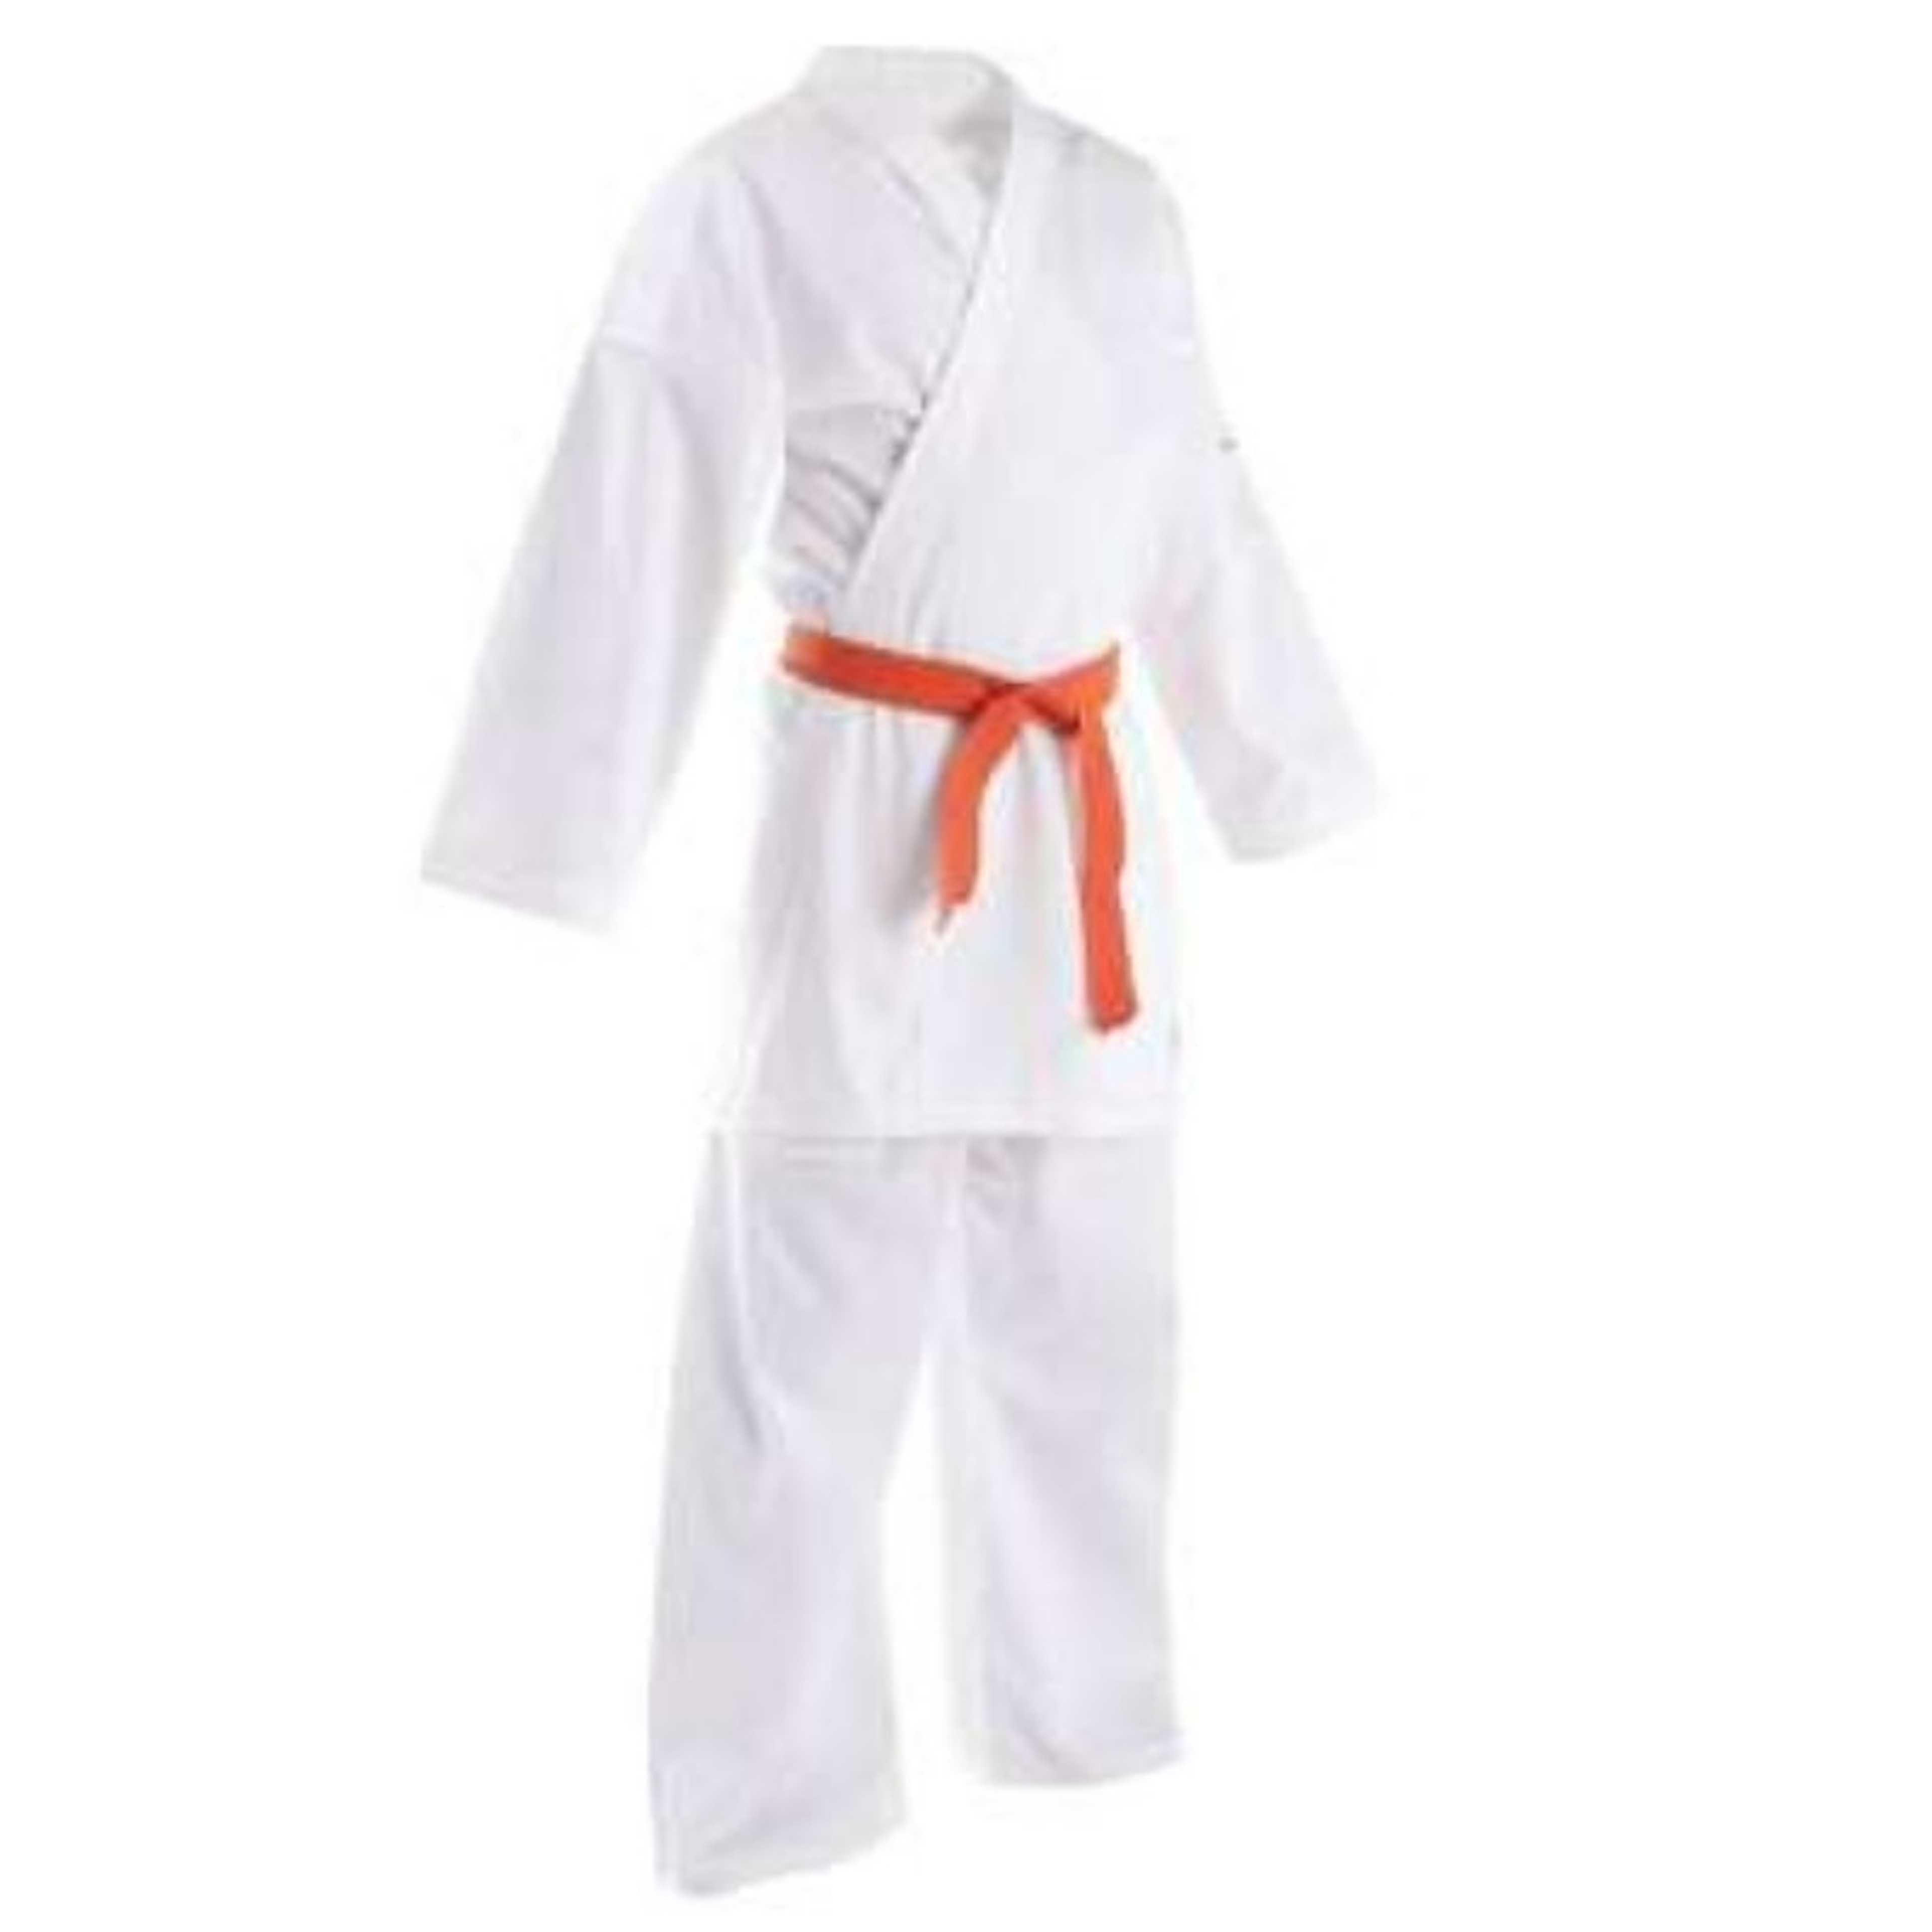 Taekwondo Dress Kits No 3 with Red Belt